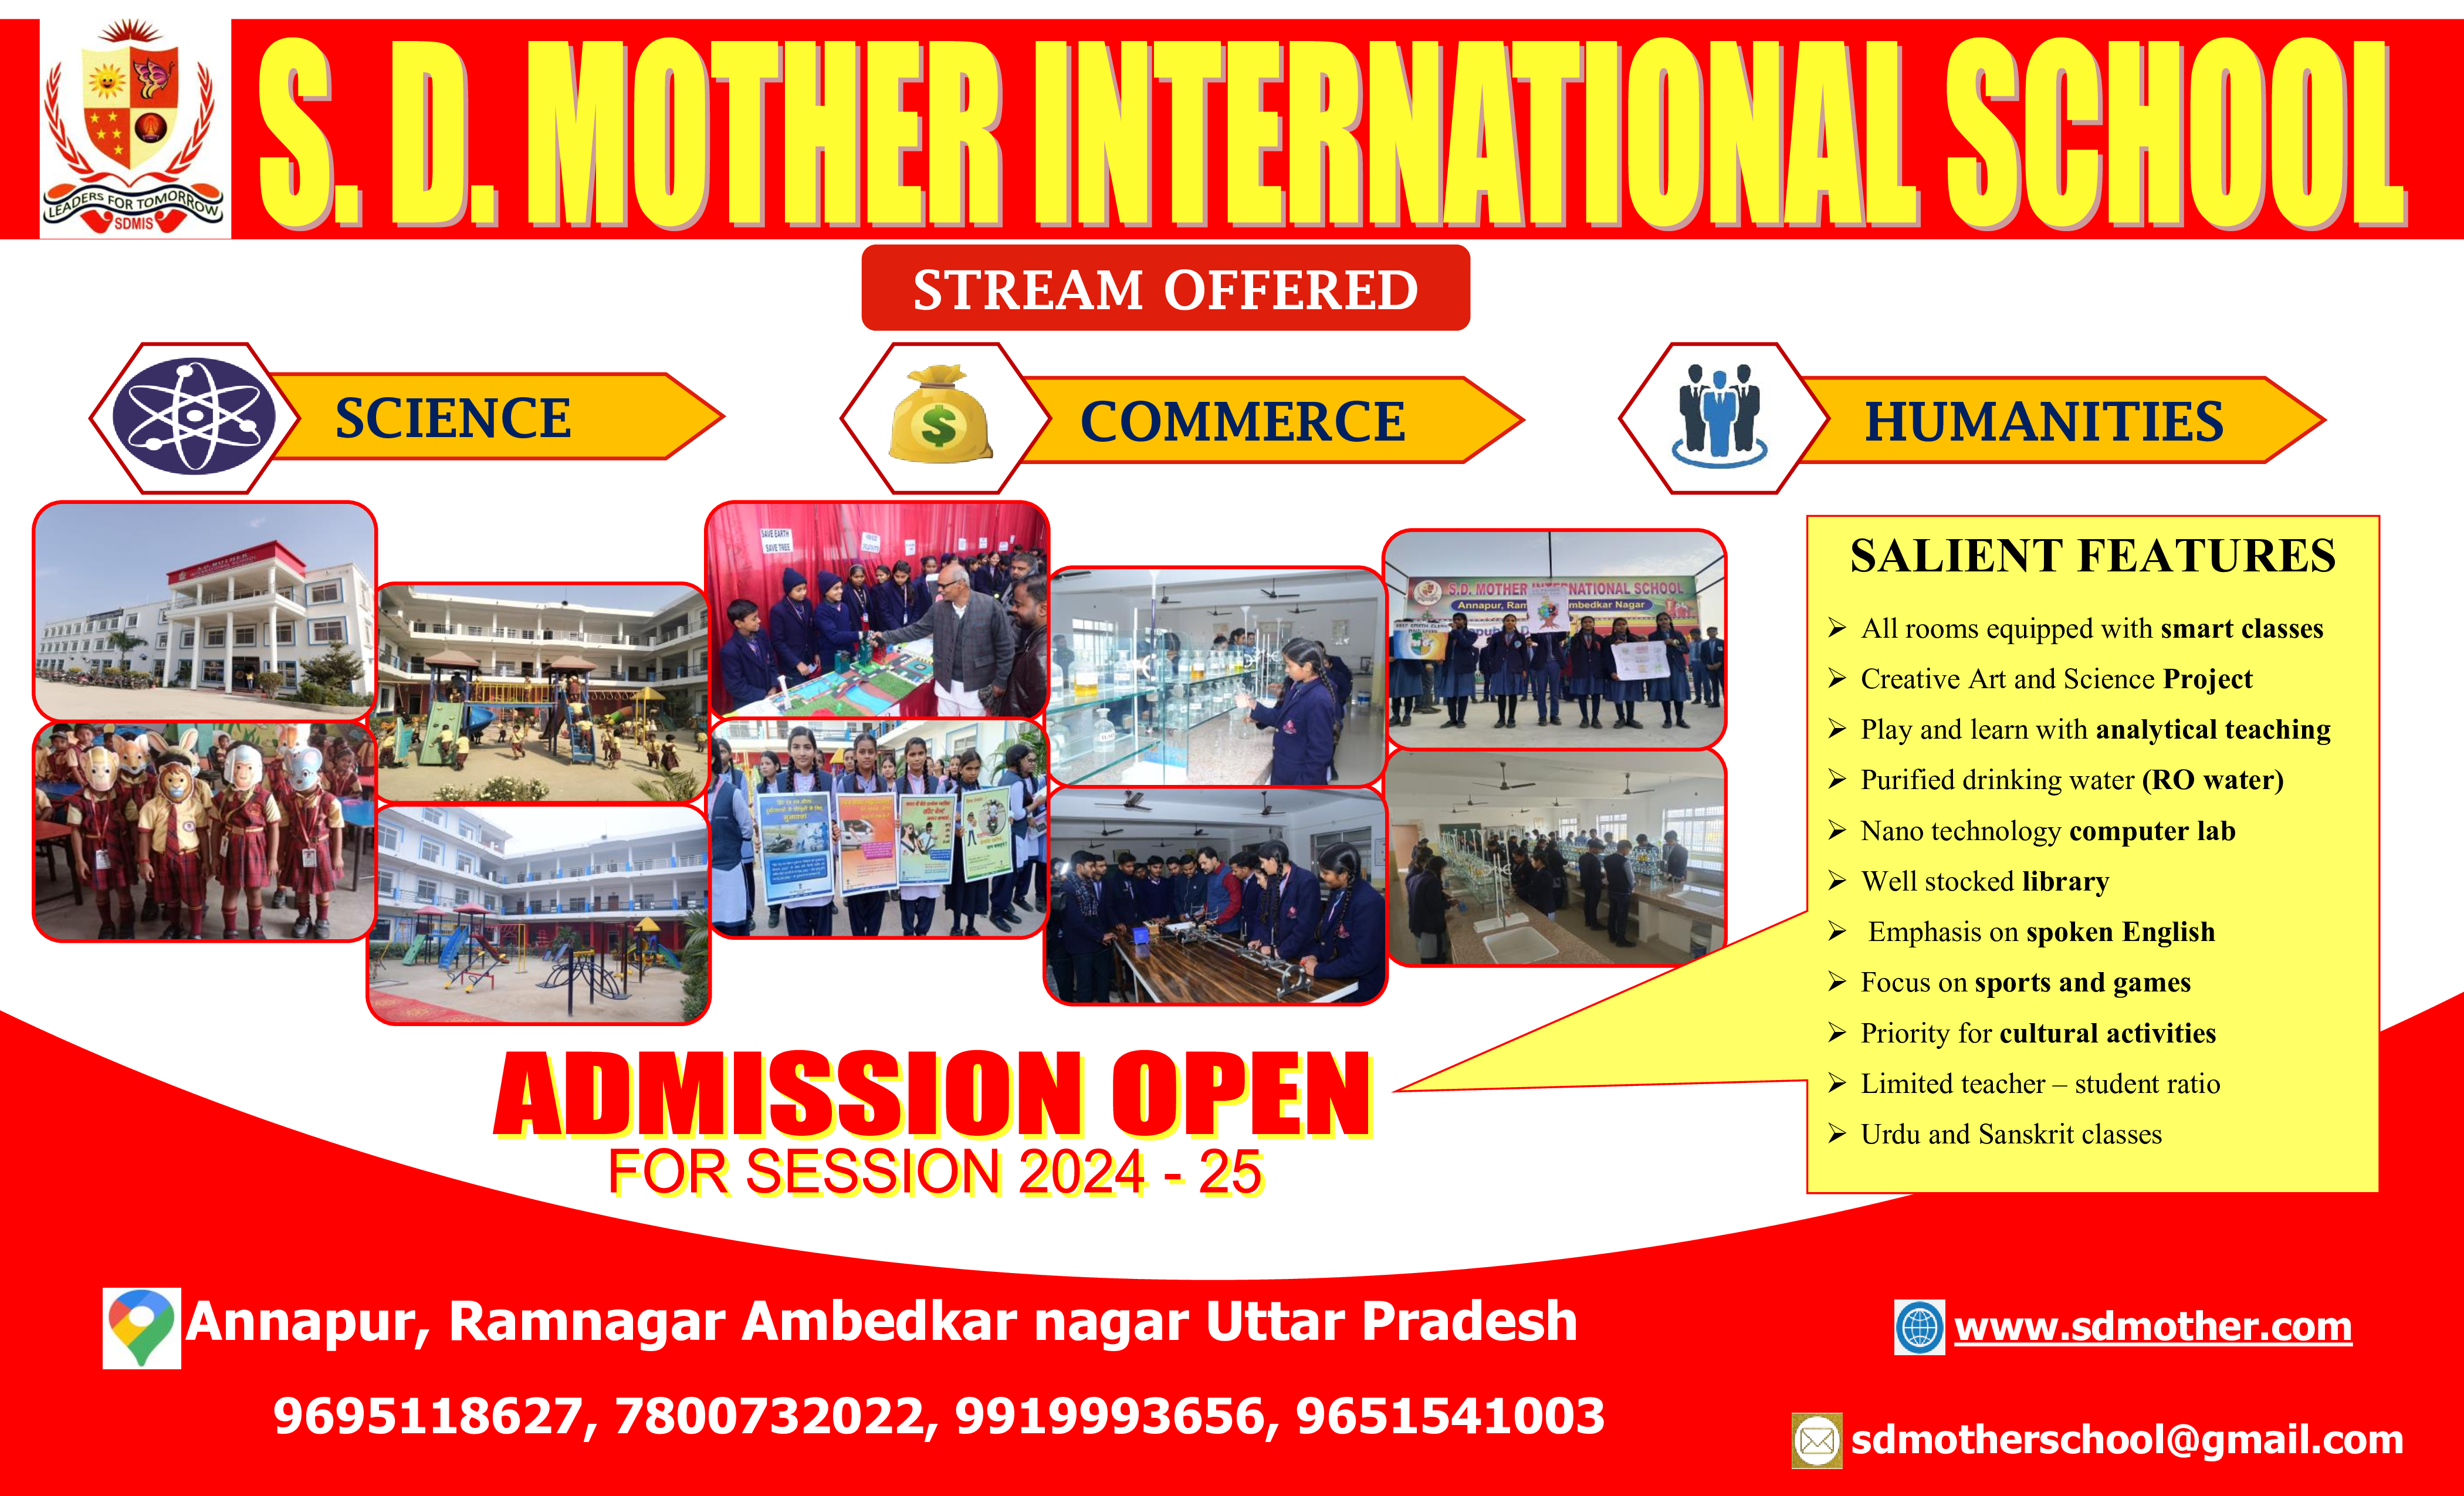 S.D. Mother International School